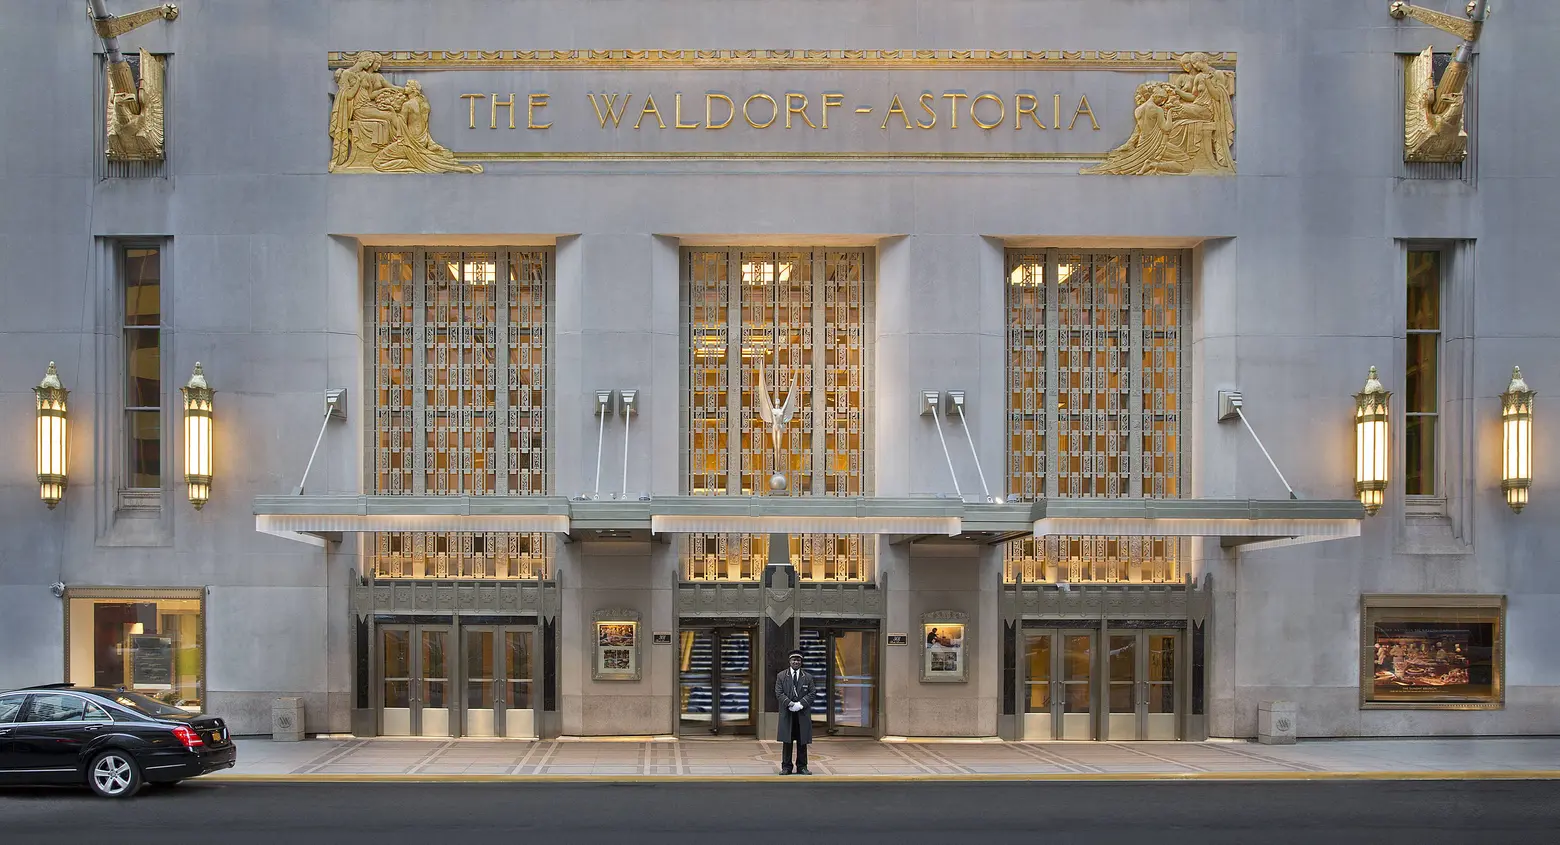 Waldorf Astoria will lose 1,000 hotel rooms in renovation